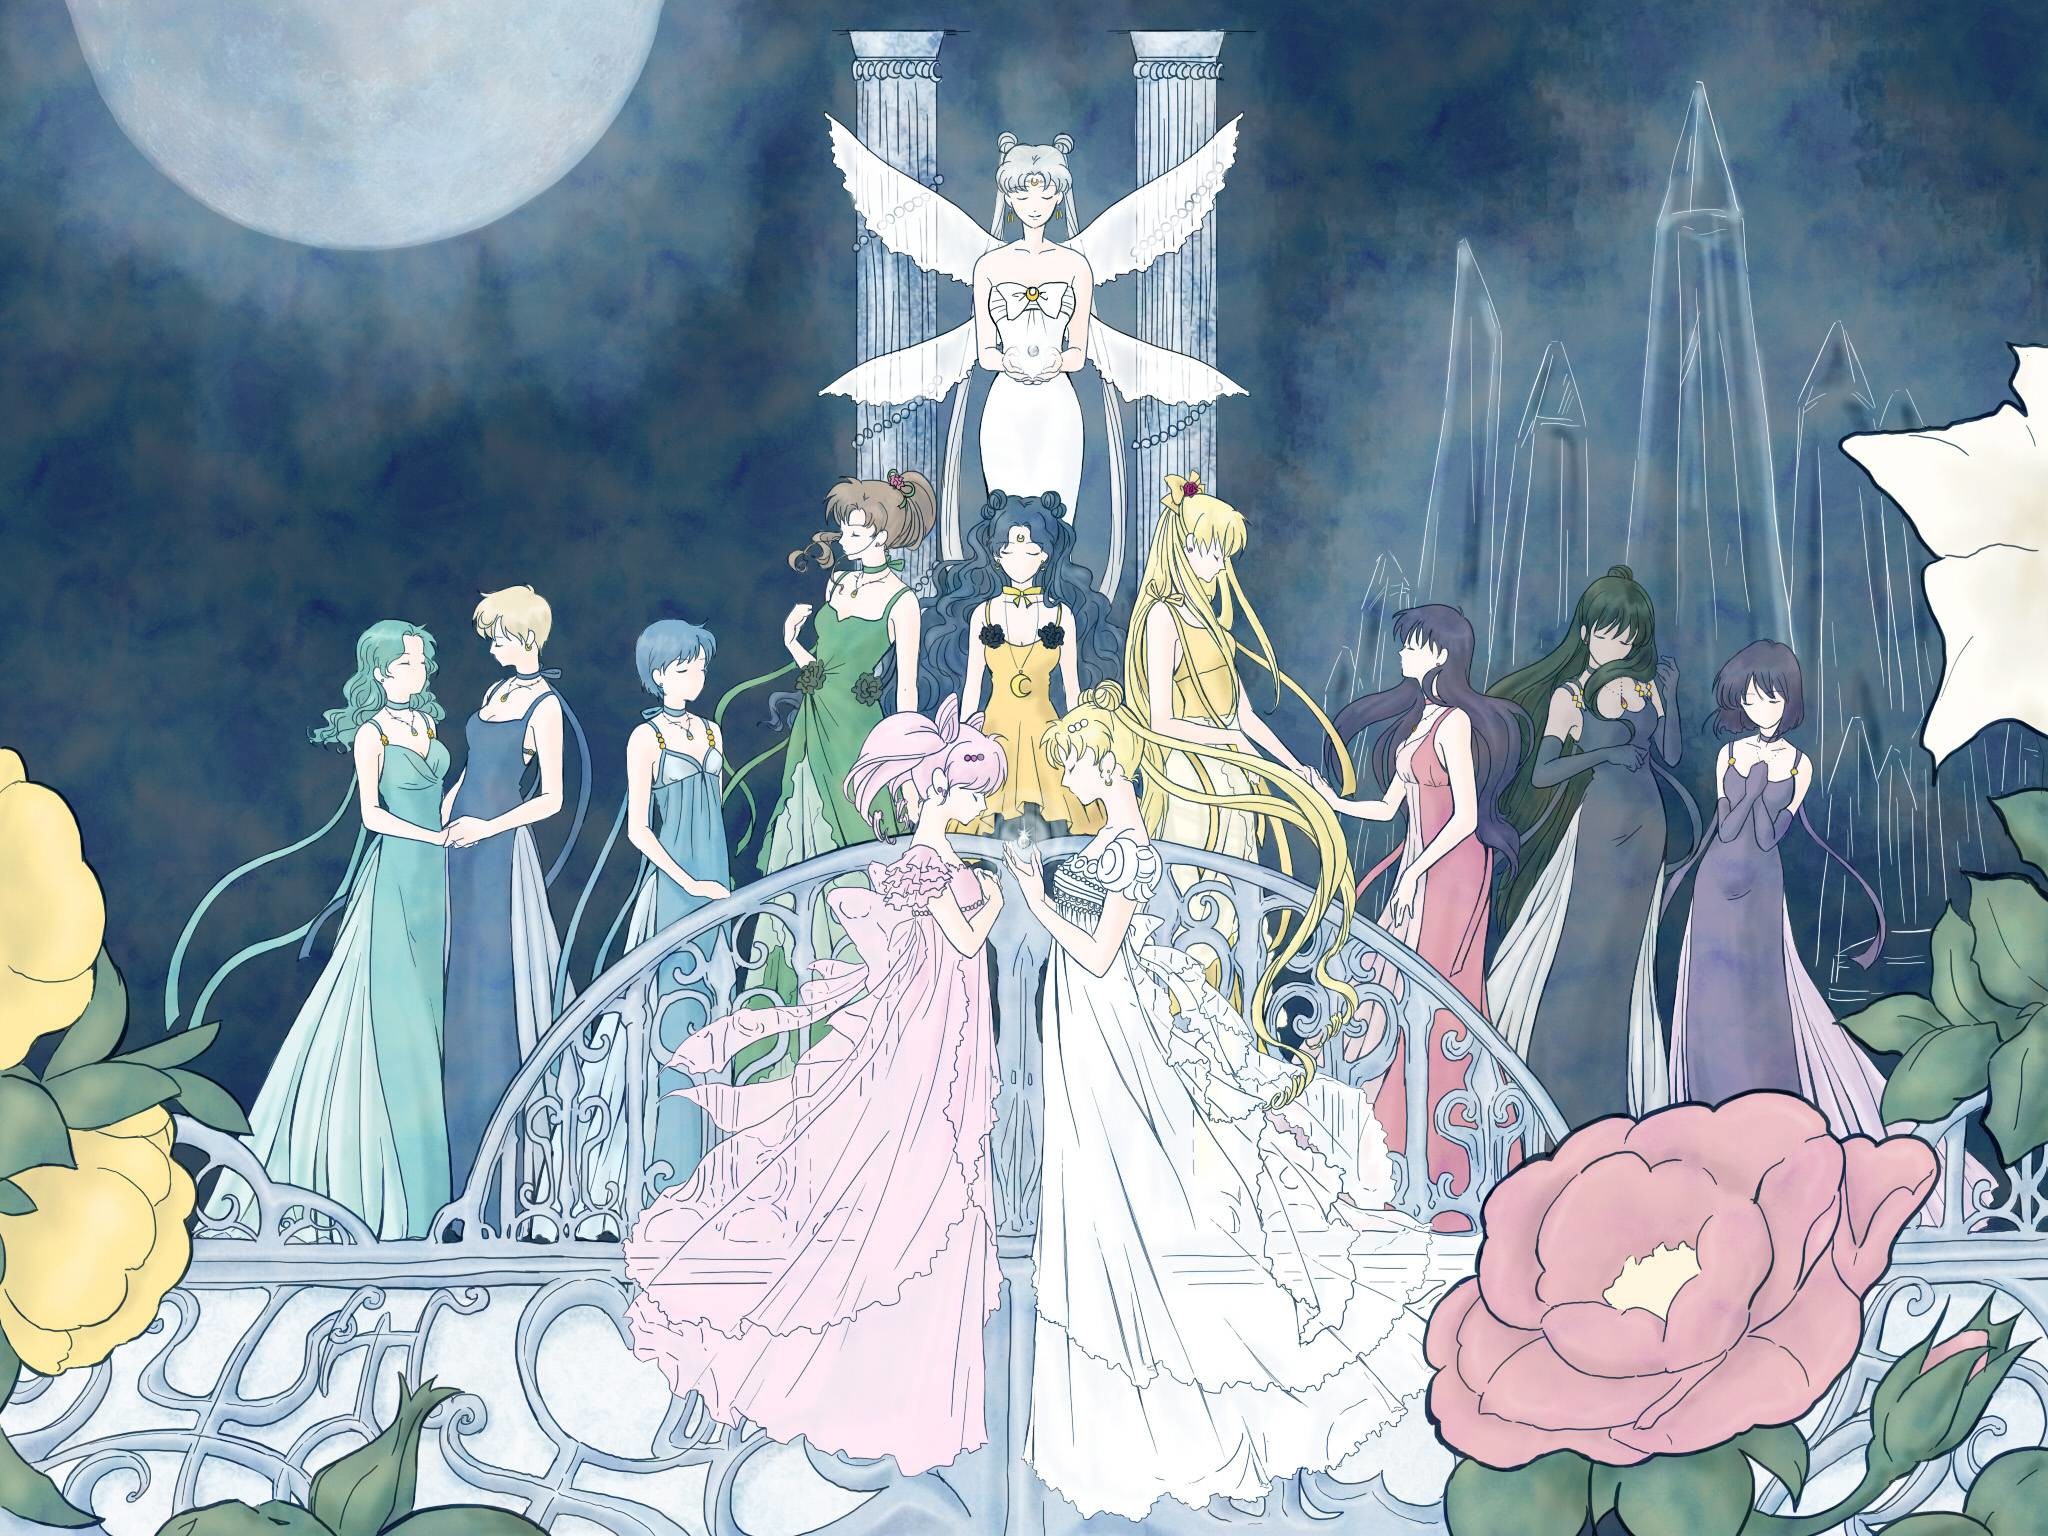 Sailor Moon iPad Wallpapers  Top Free Sailor Moon iPad Backgrounds   WallpaperAccess